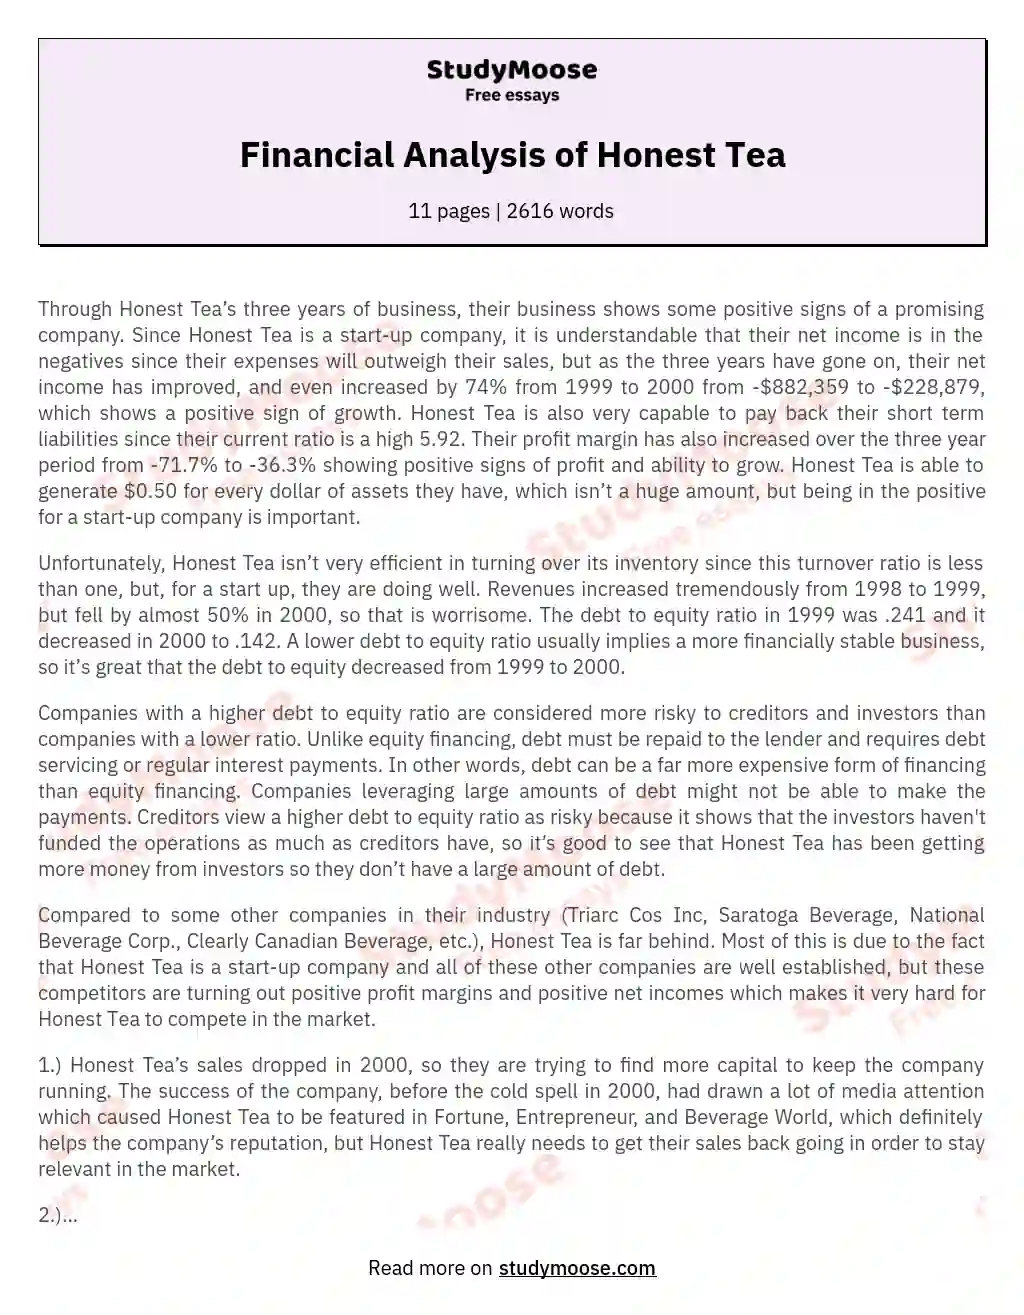 Financial Analysis of Honest Tea